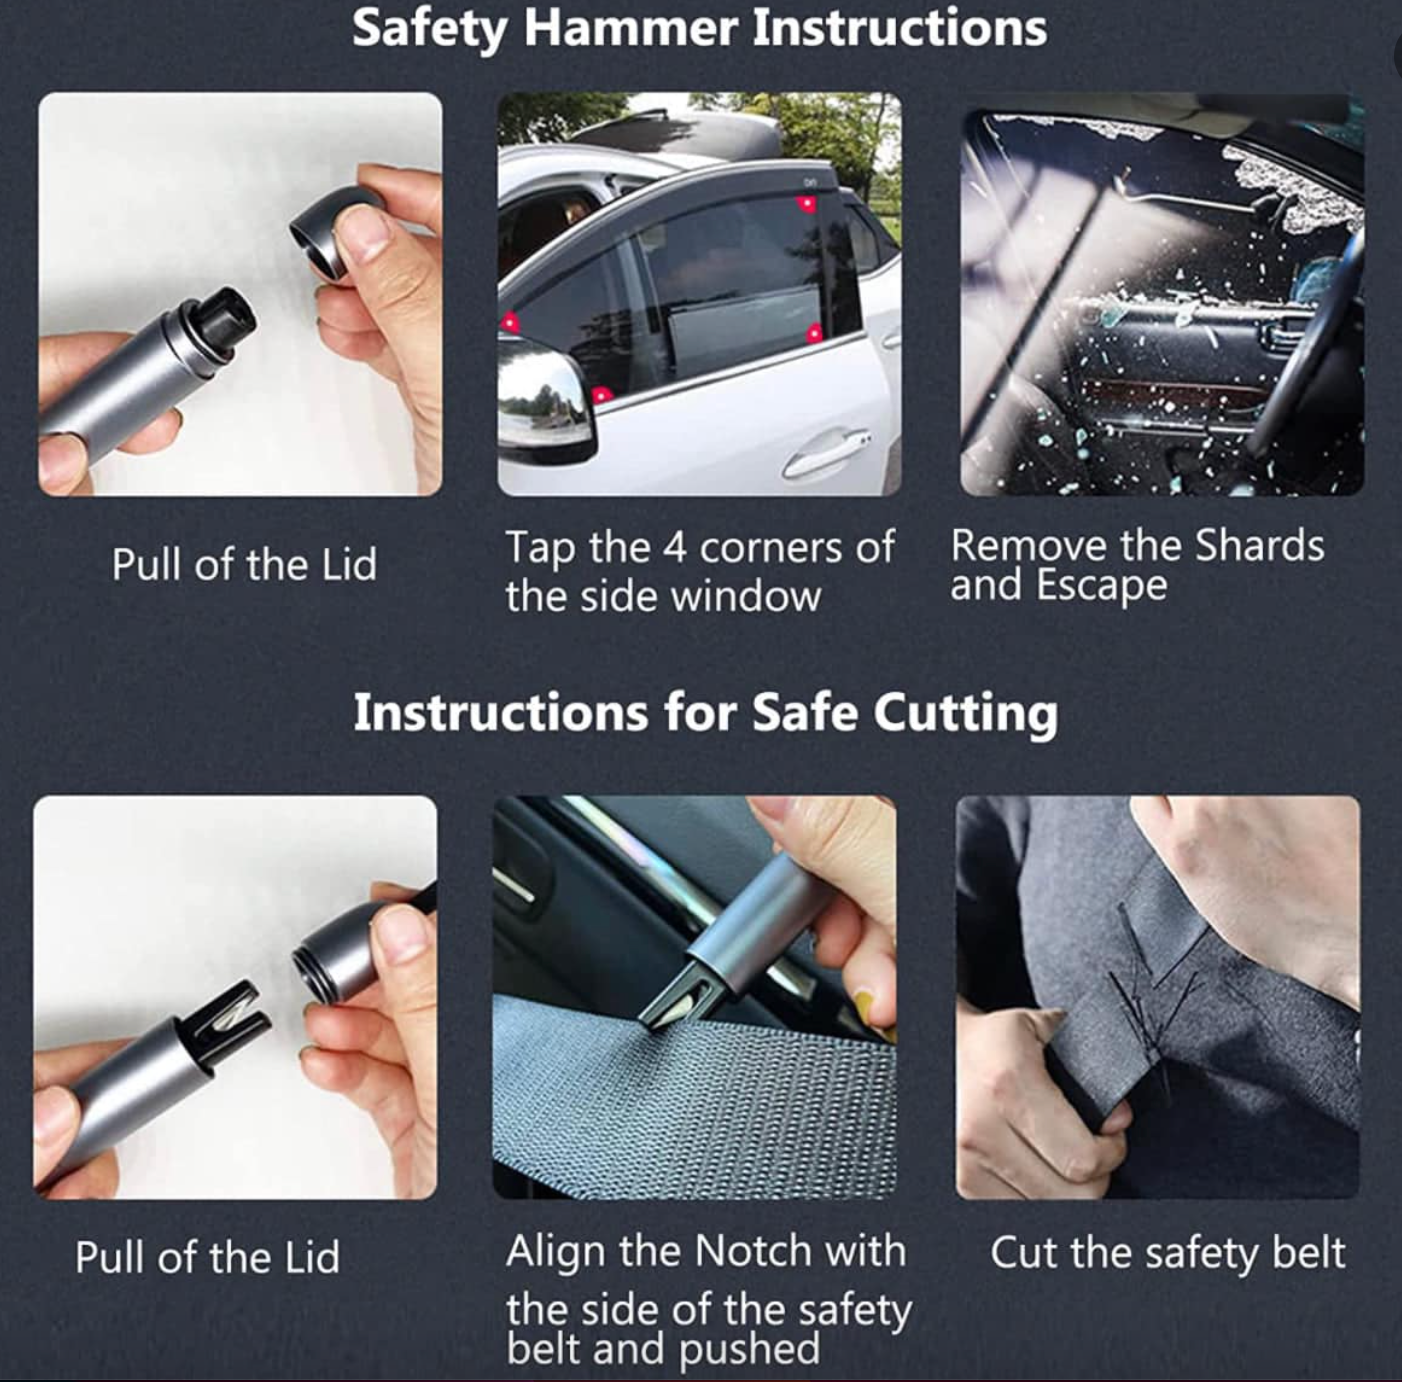 Safety Hammer